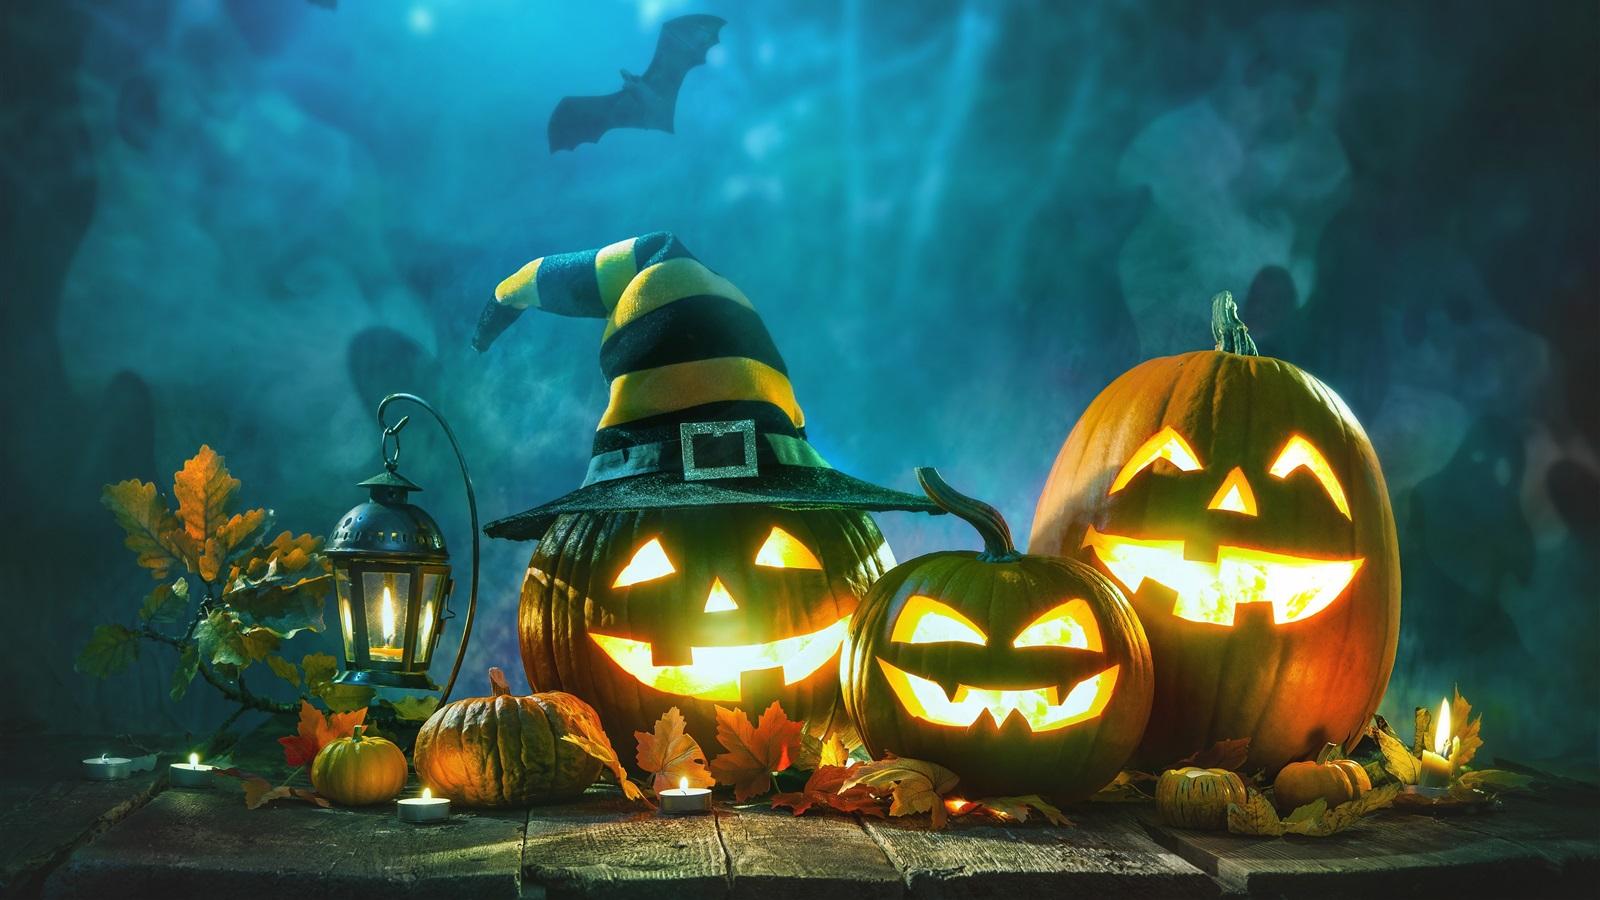 Wallpaper Halloween, pumpkin lamp, night 3840x2160 UHD 4K